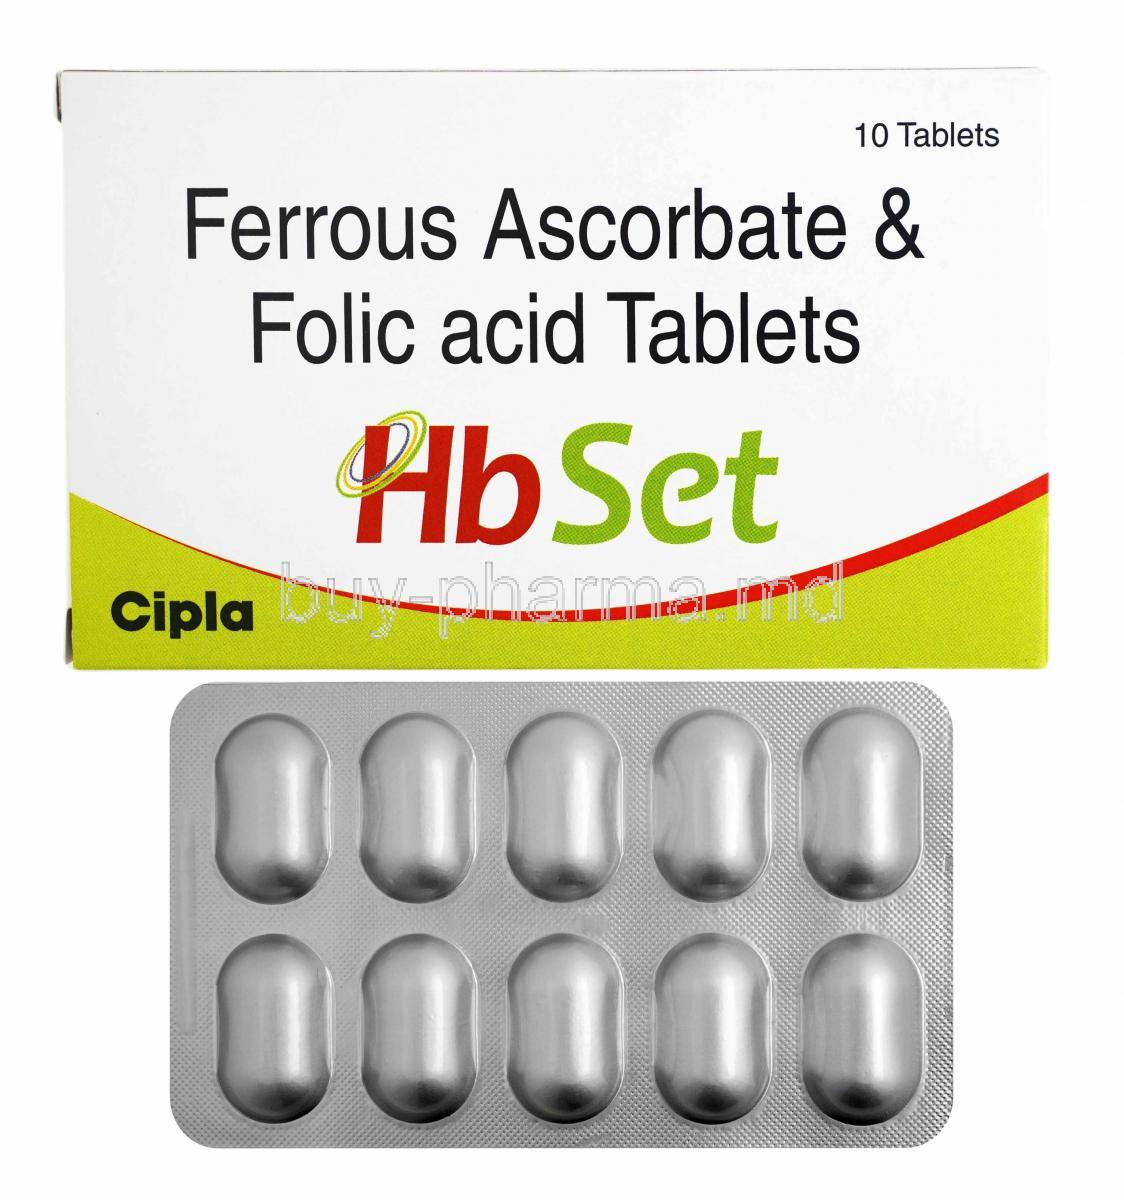 HB Set, Elemental Iron and Folic Acid box and tablets